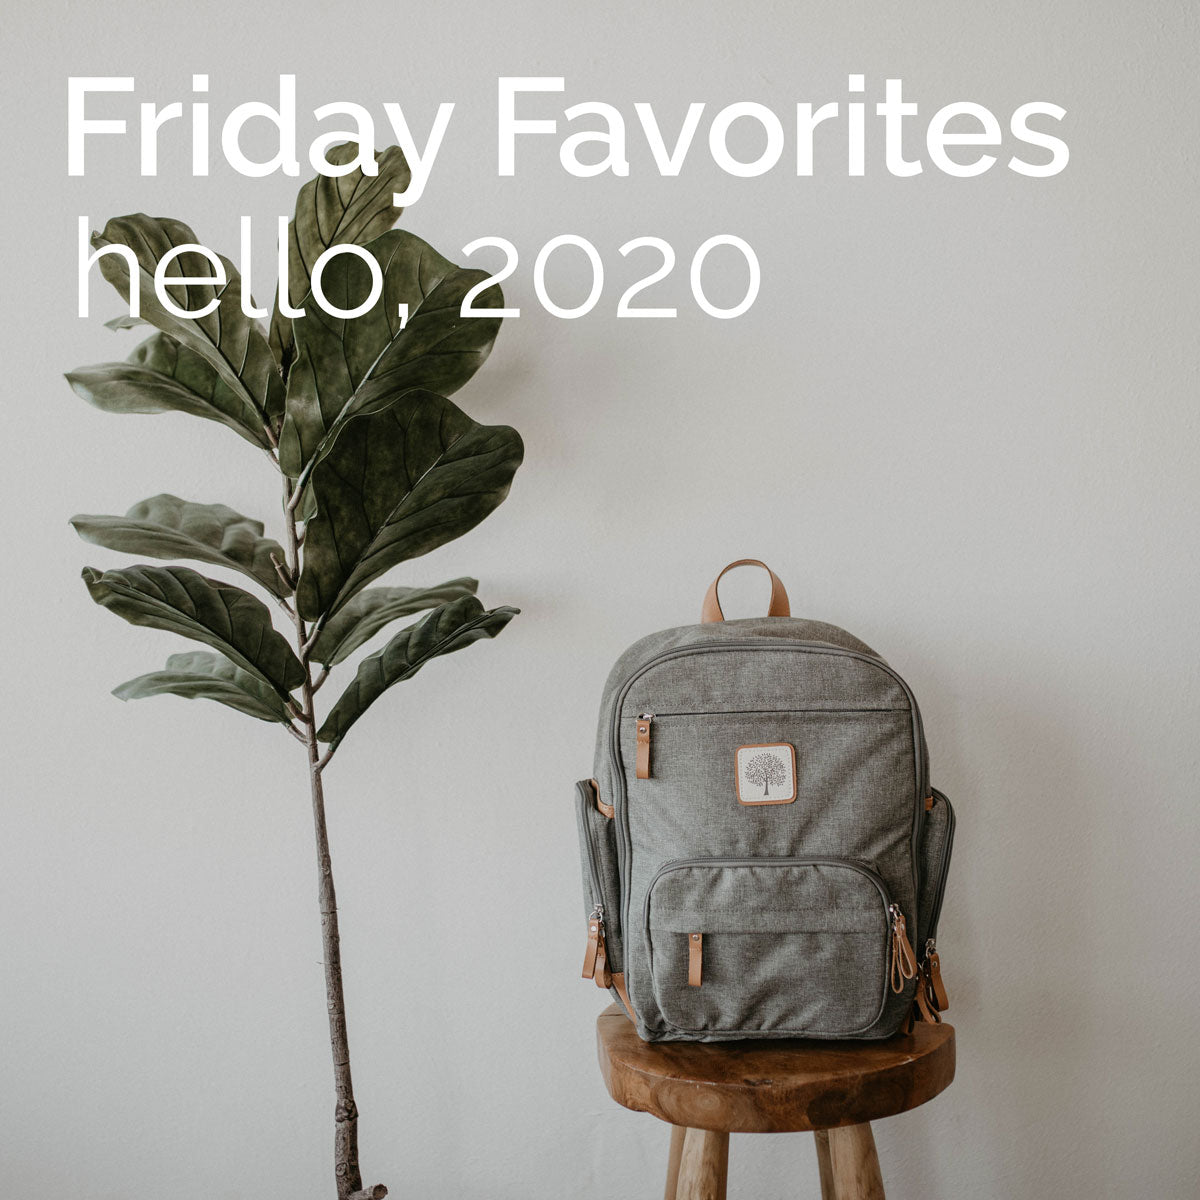 Friday Favorites: Hello 2020